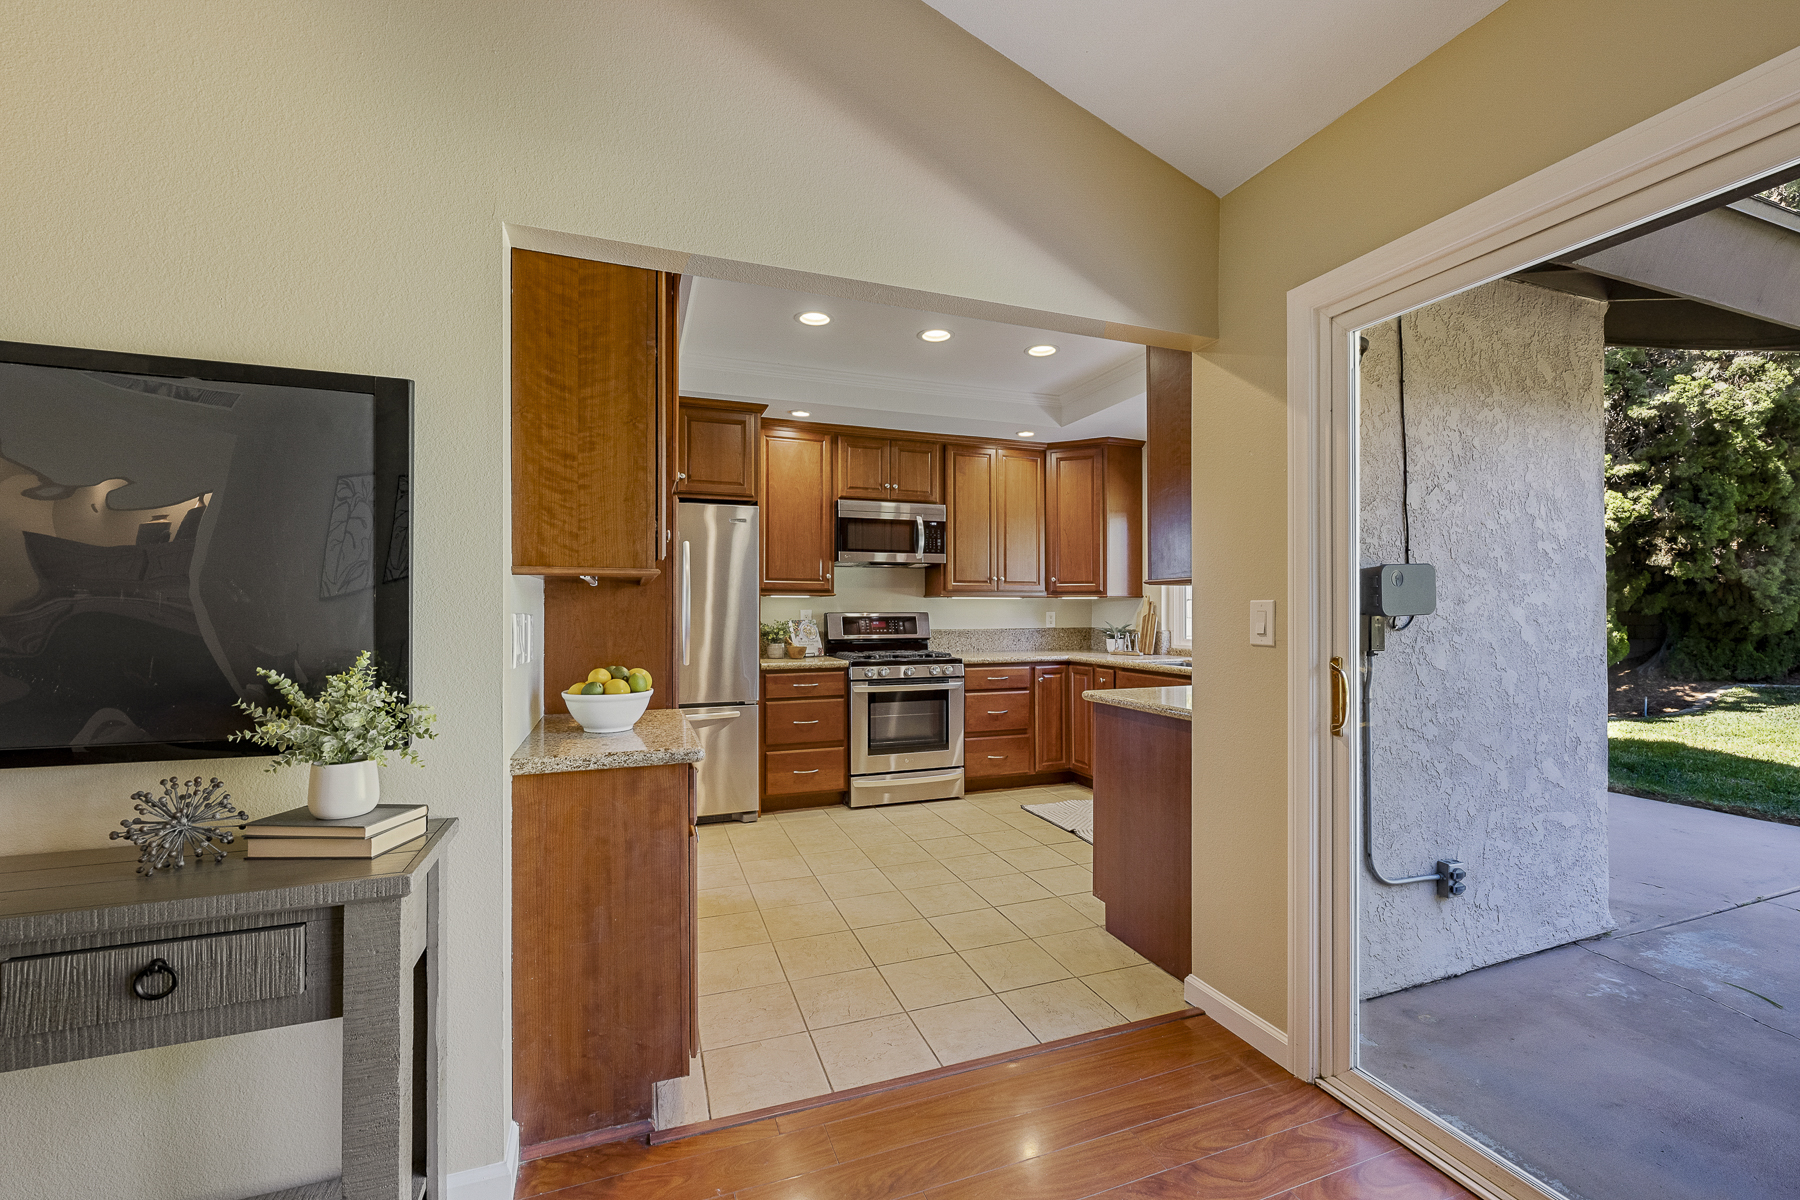 Fullerton Single Level Cul-De-Sac Home – 707 San Ramon Drive, Fullerton, CA 92835 - Living Room Kitchen View